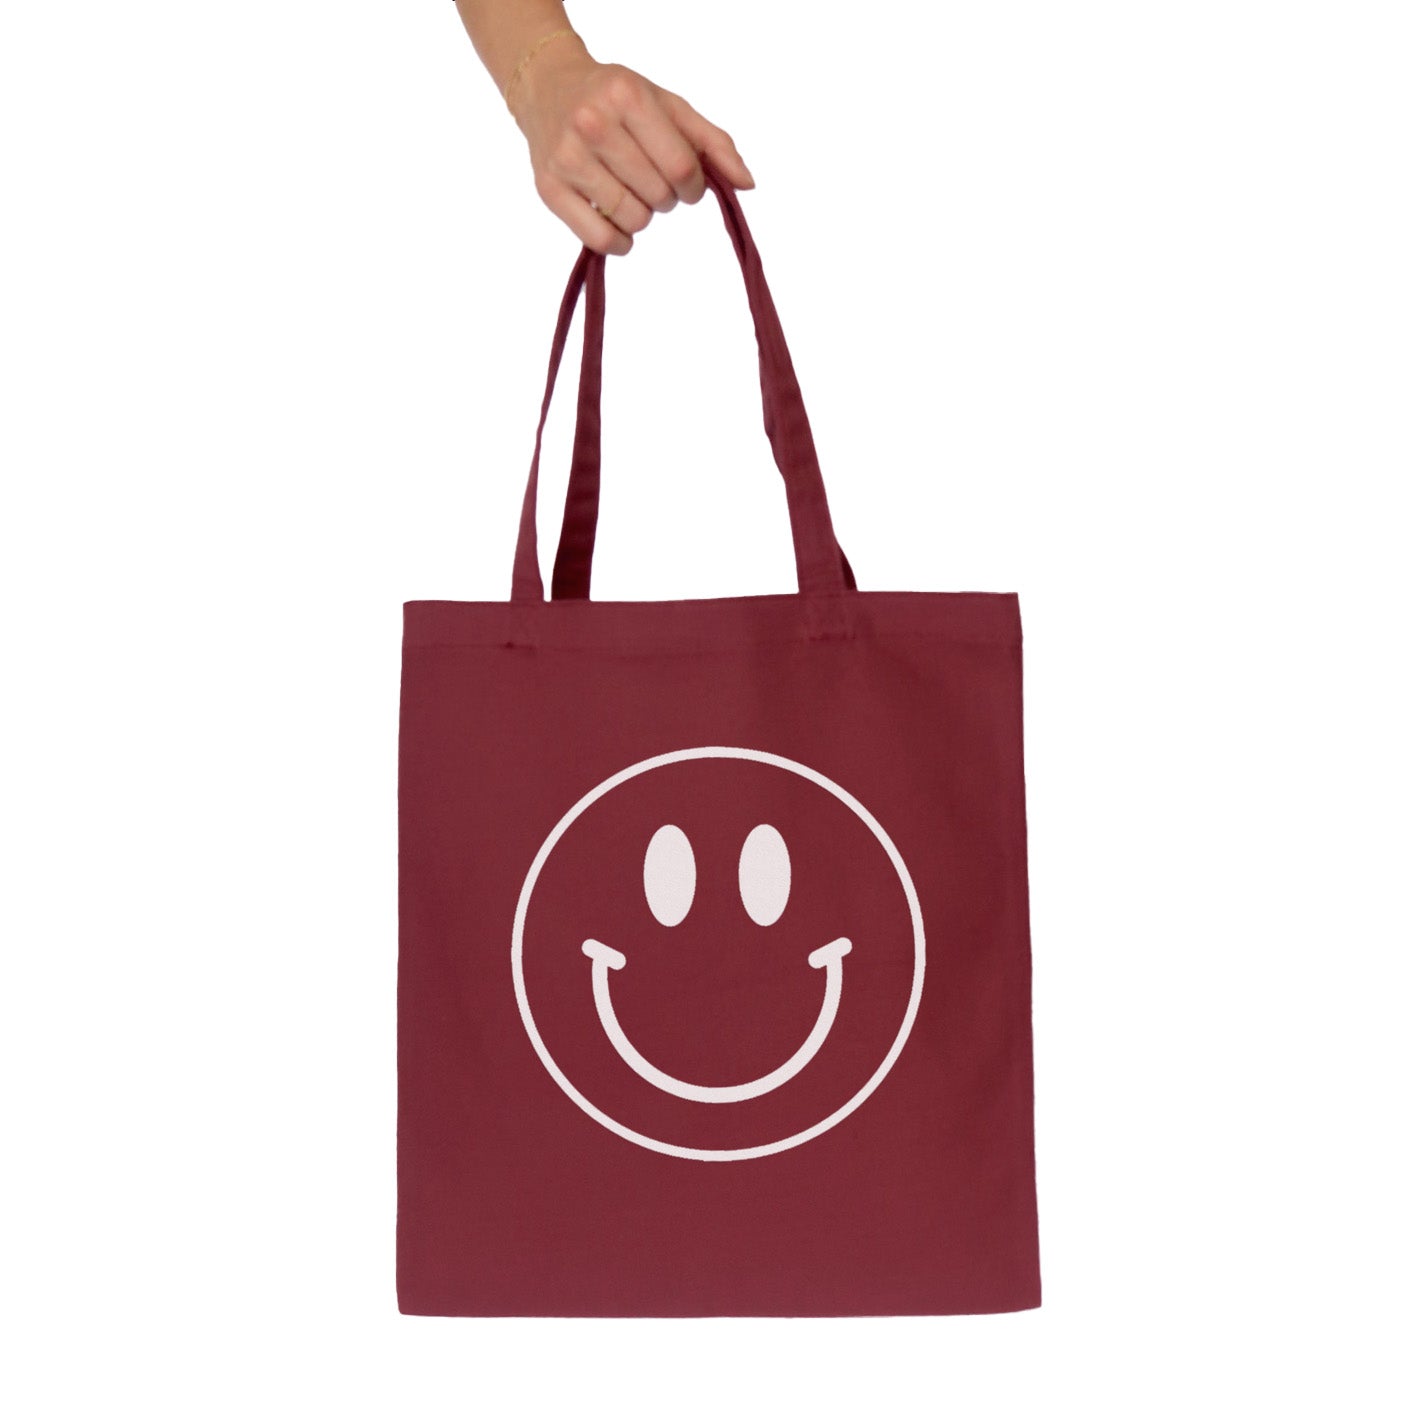 Smile Outline Tote Bag